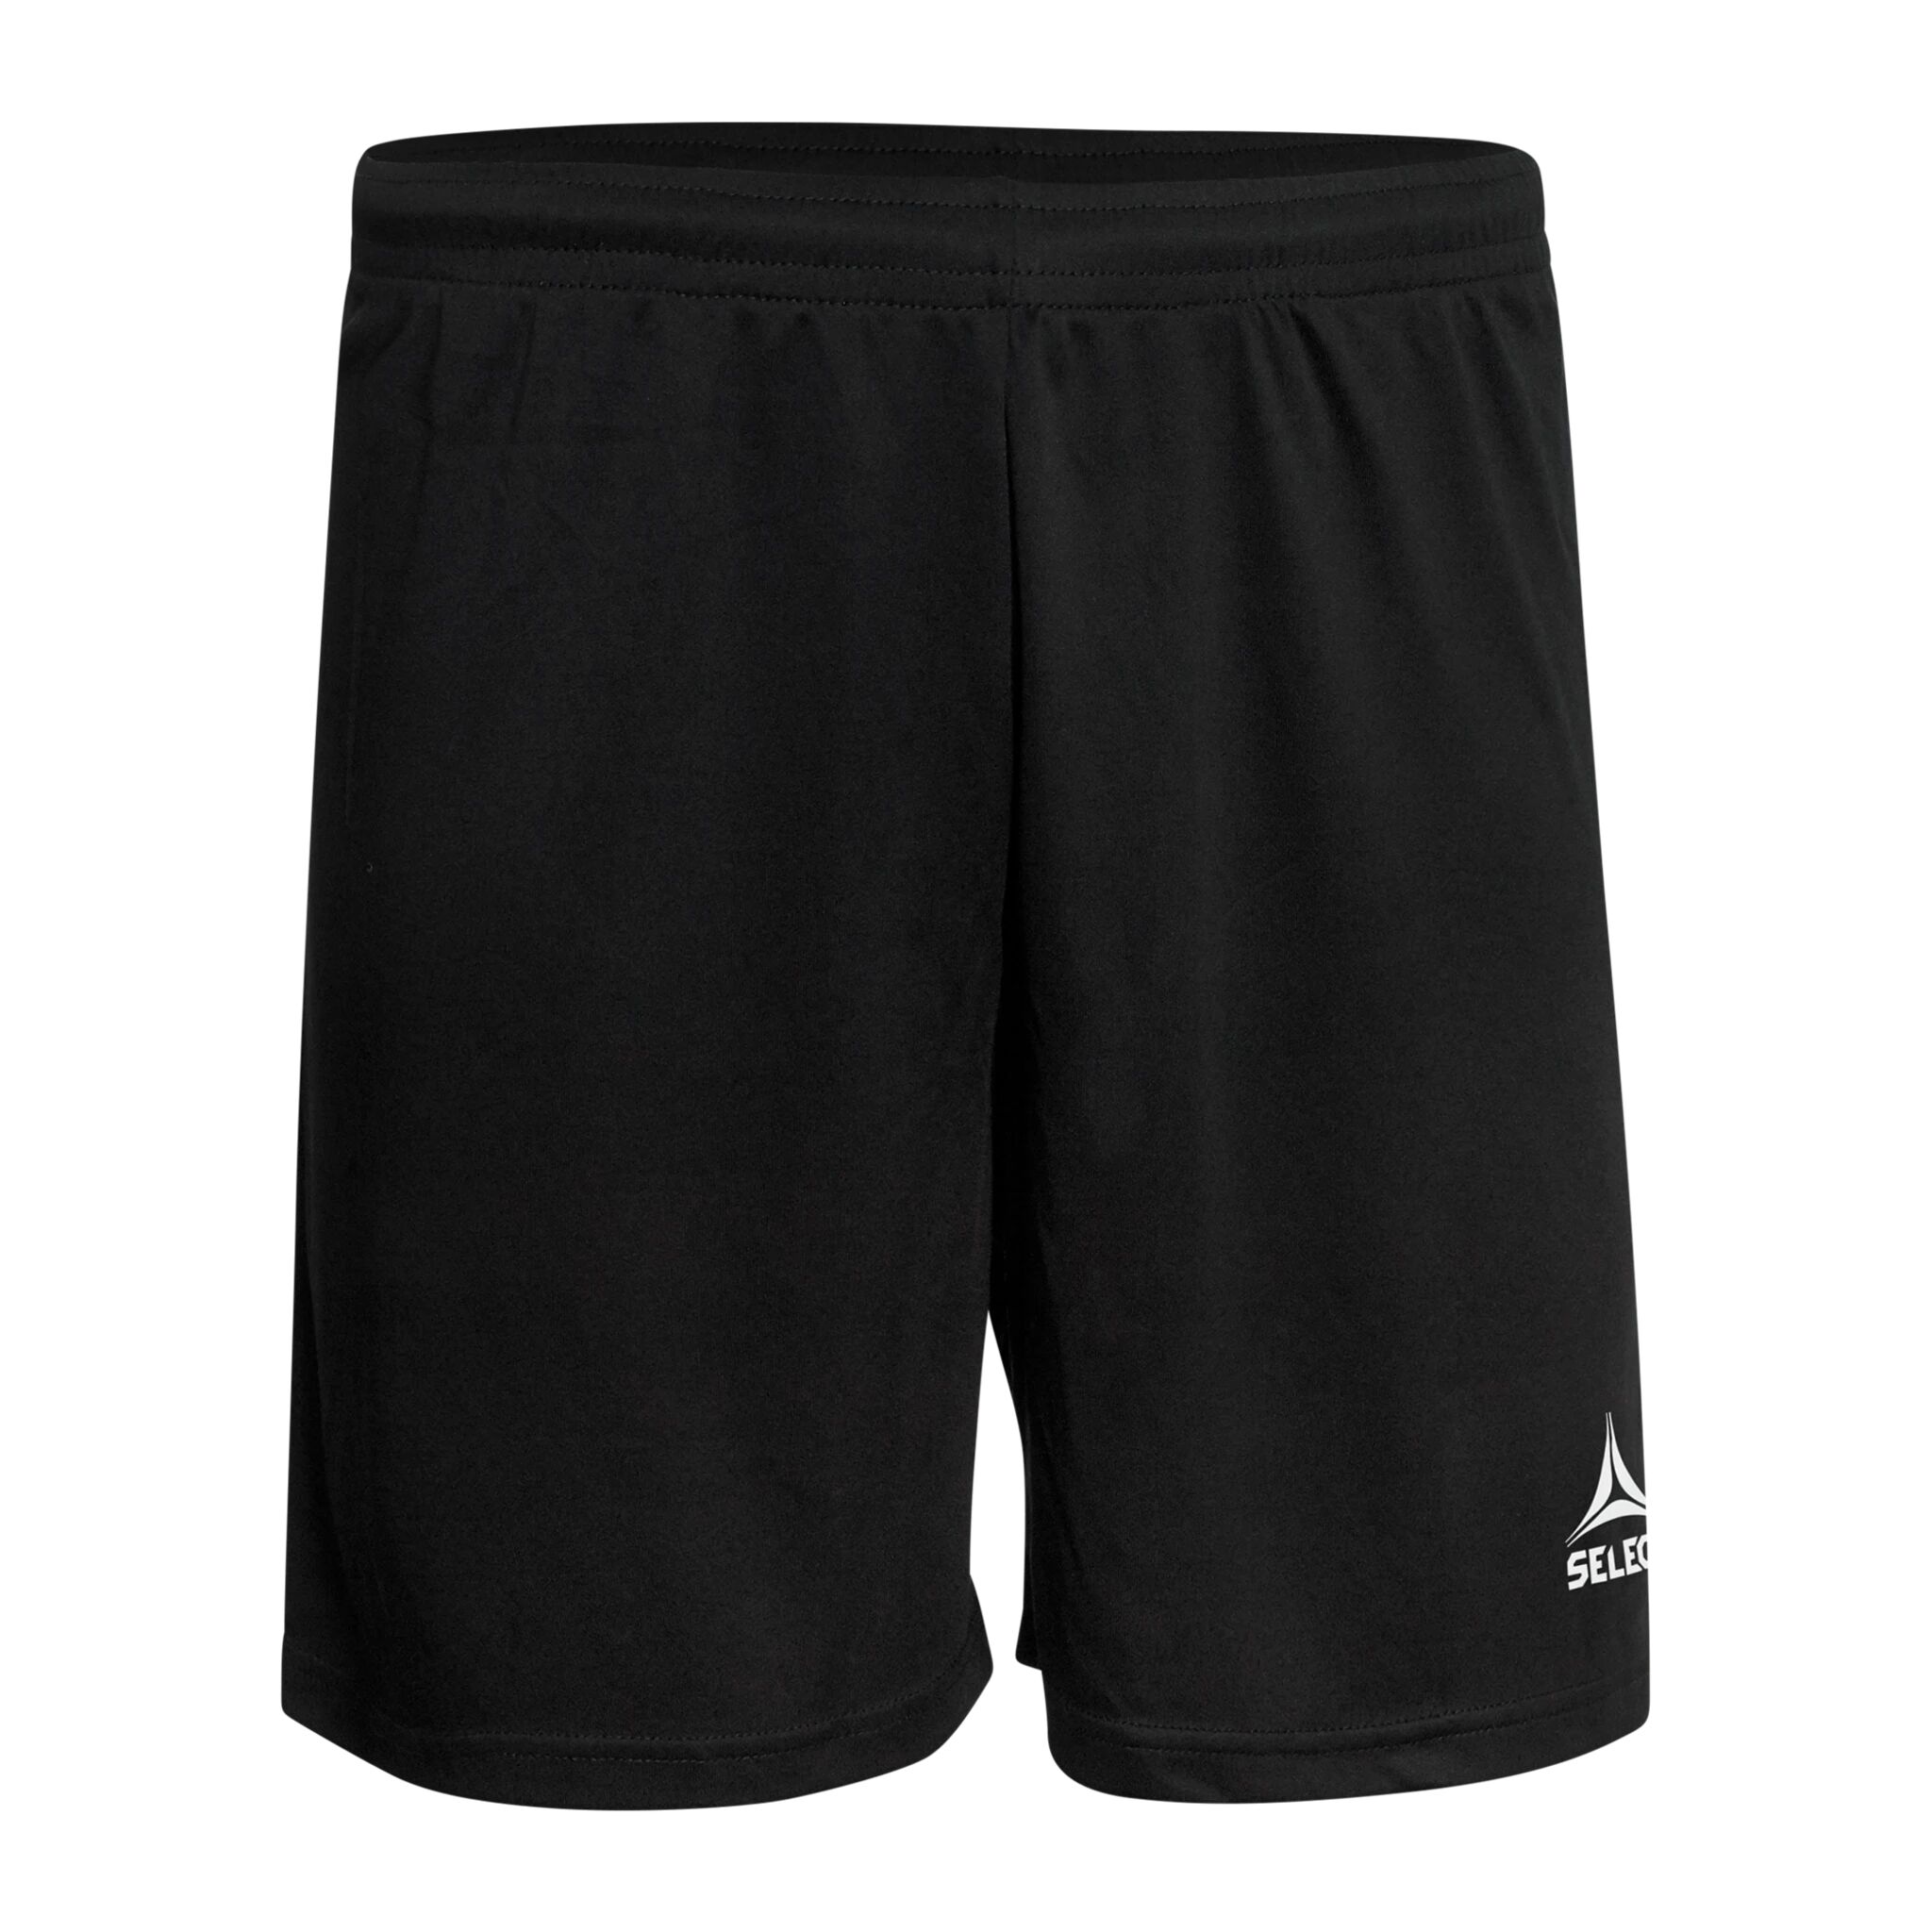 Select Player shorts Pisa, shorts senior 164 BLACK